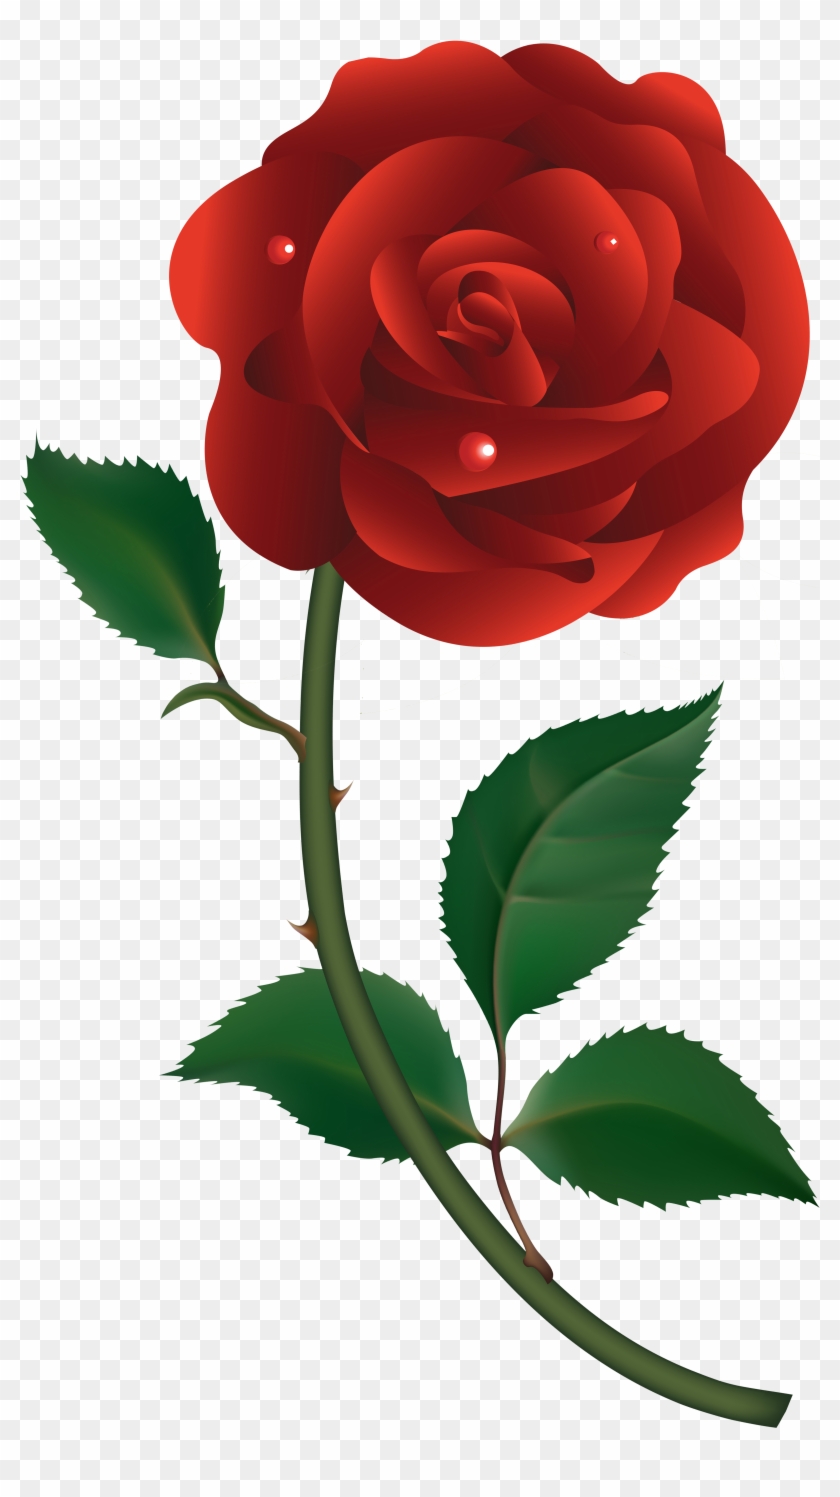 Red Rose Vector - Gül Resmi Png #406684